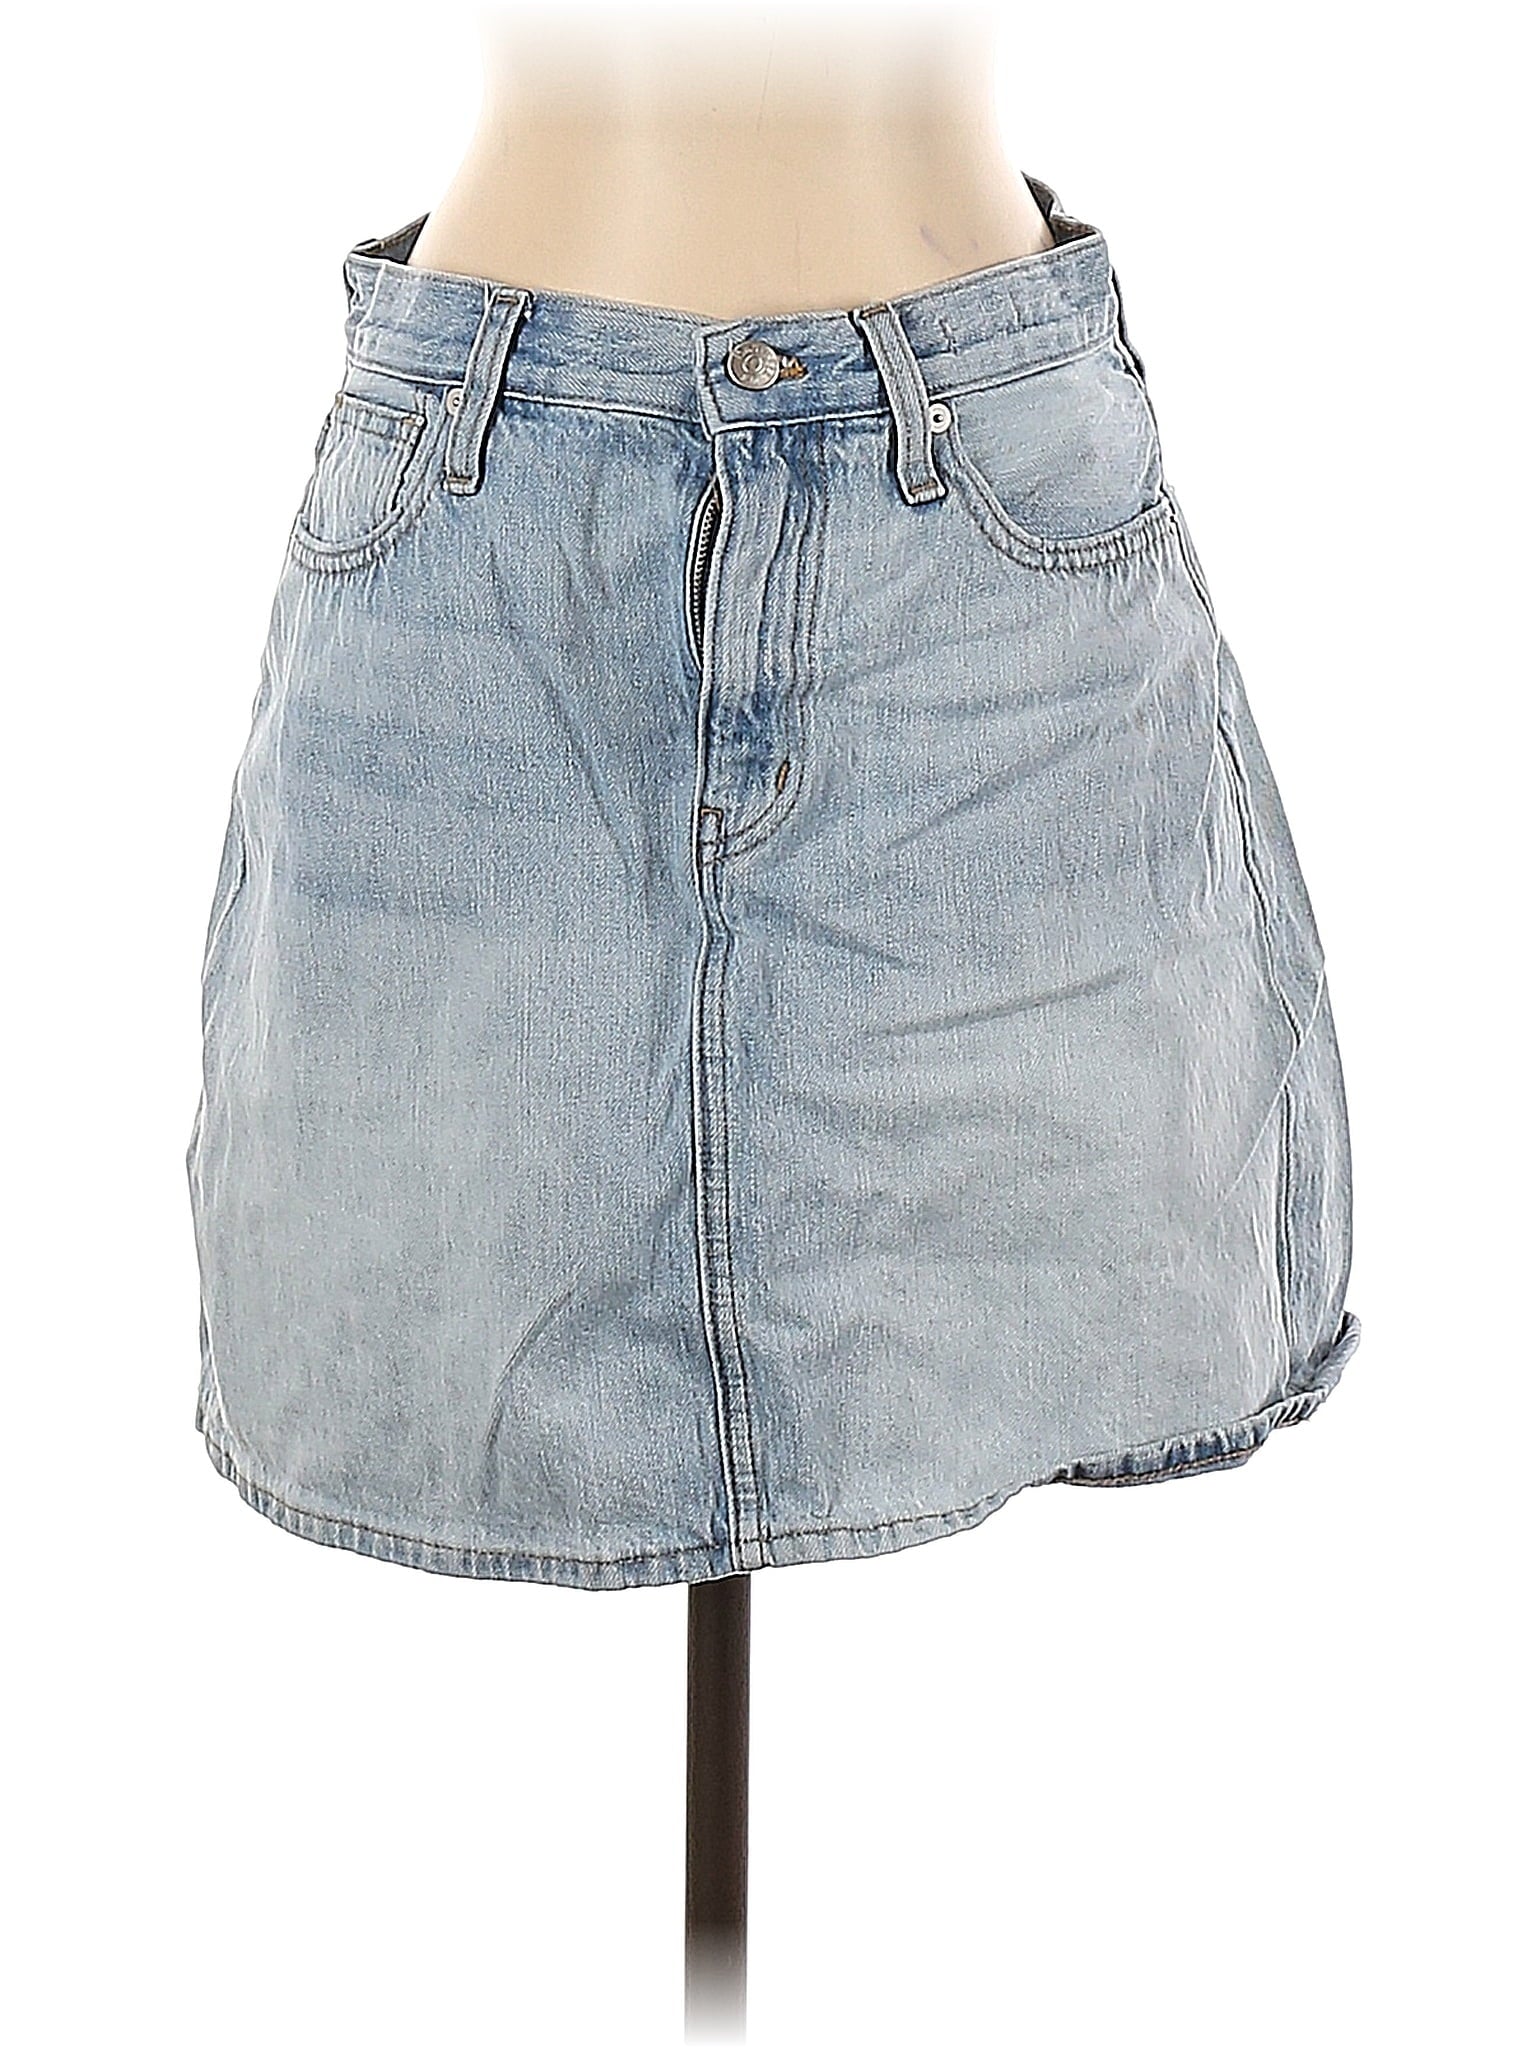 Denim Skirt waist size - 26